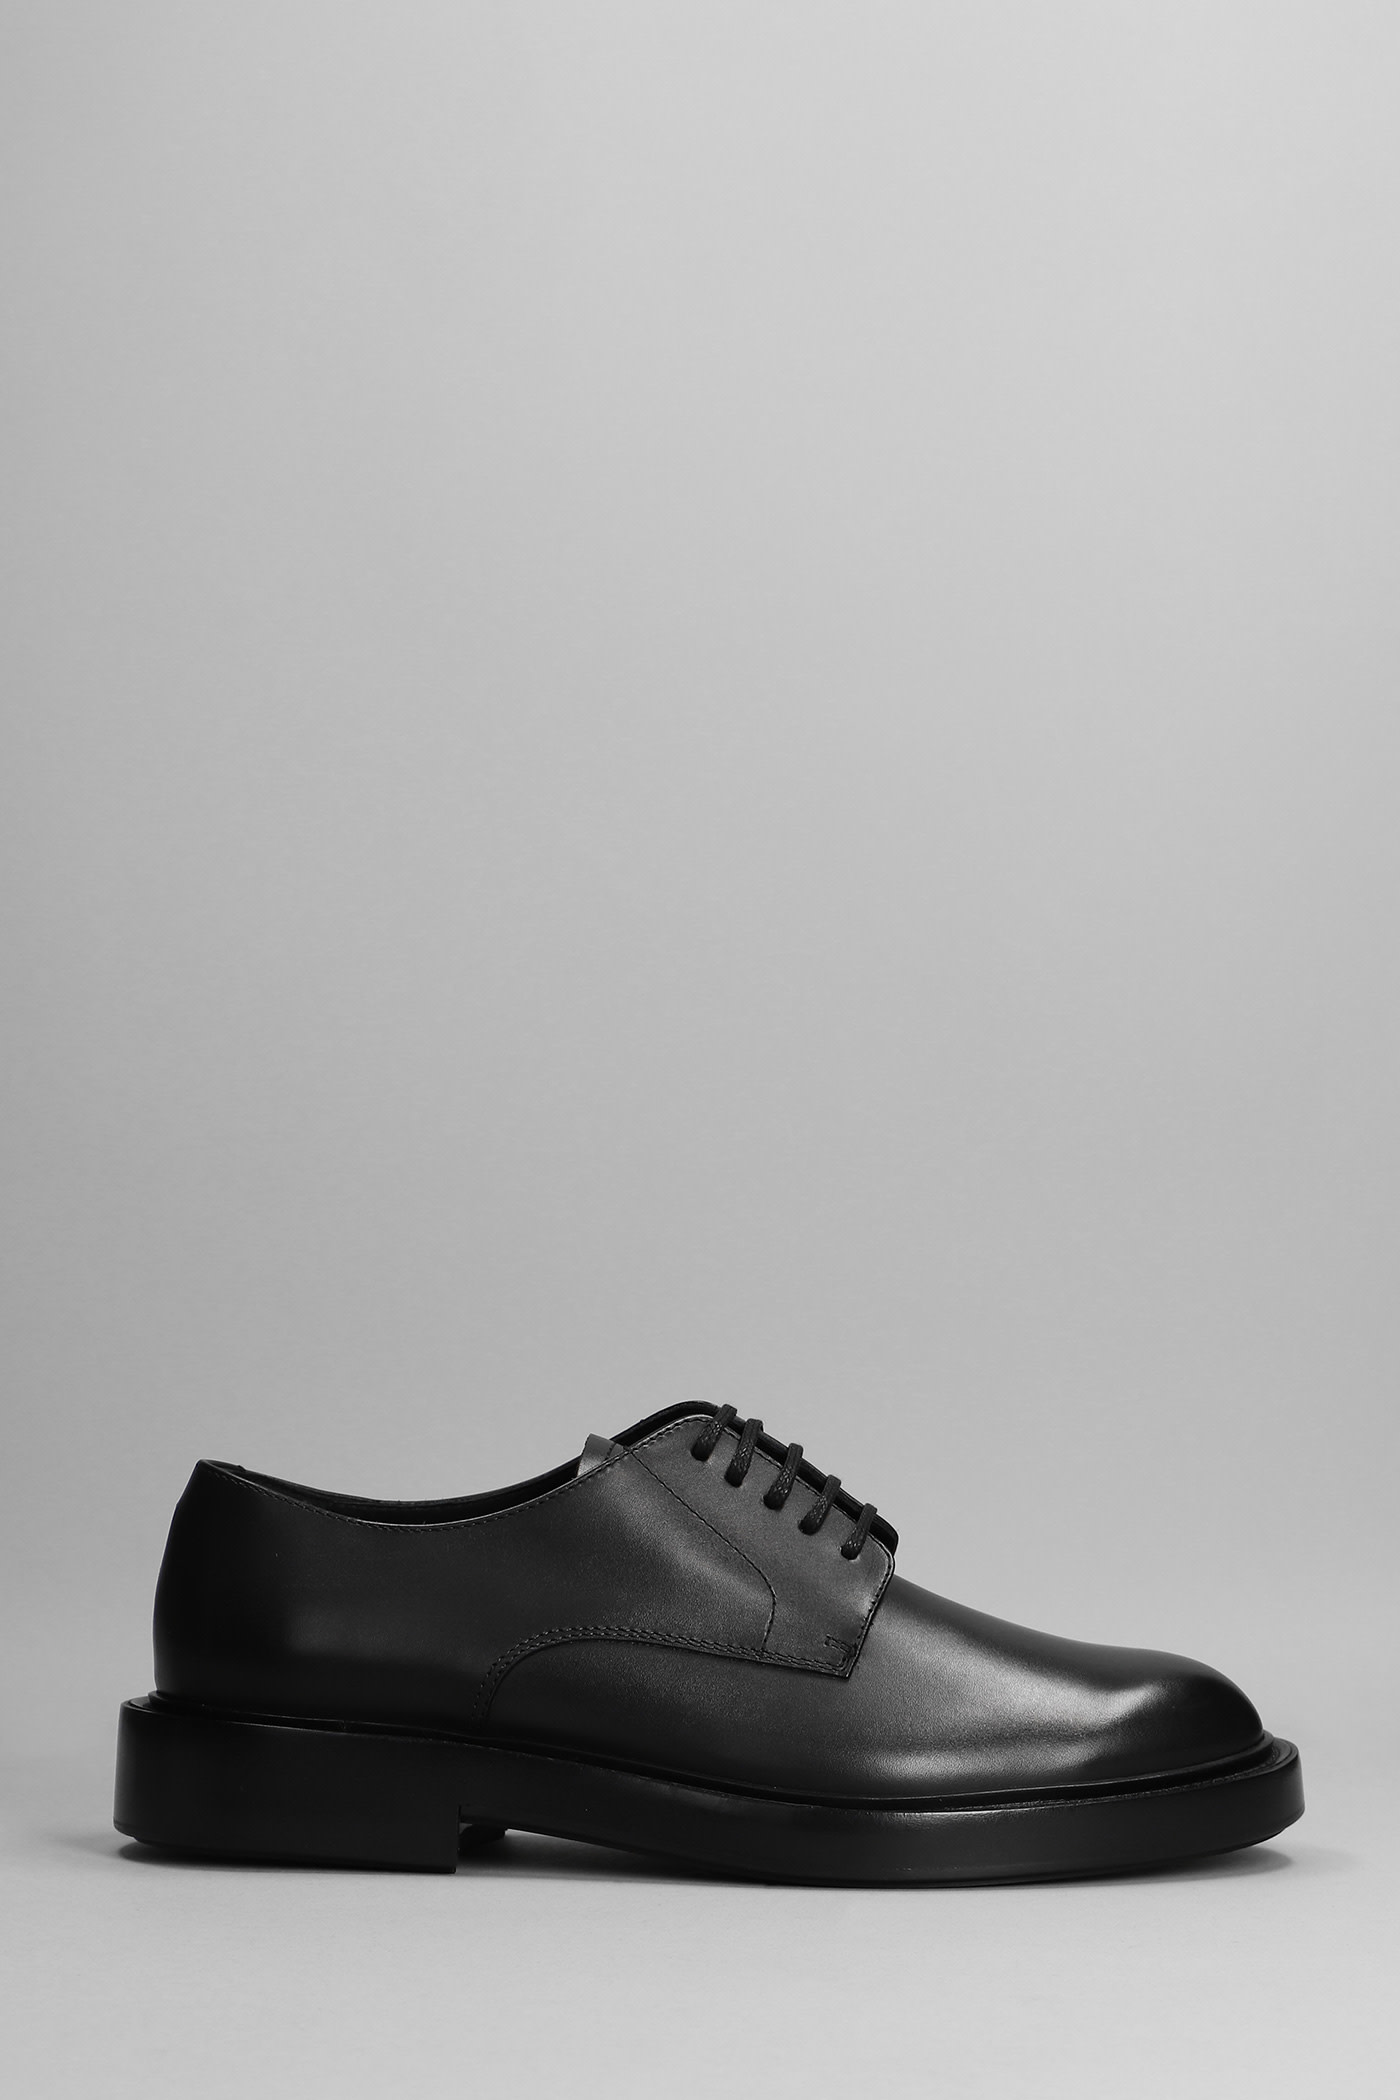 Giorgio Armani Lace Up Shoes In Black Leather